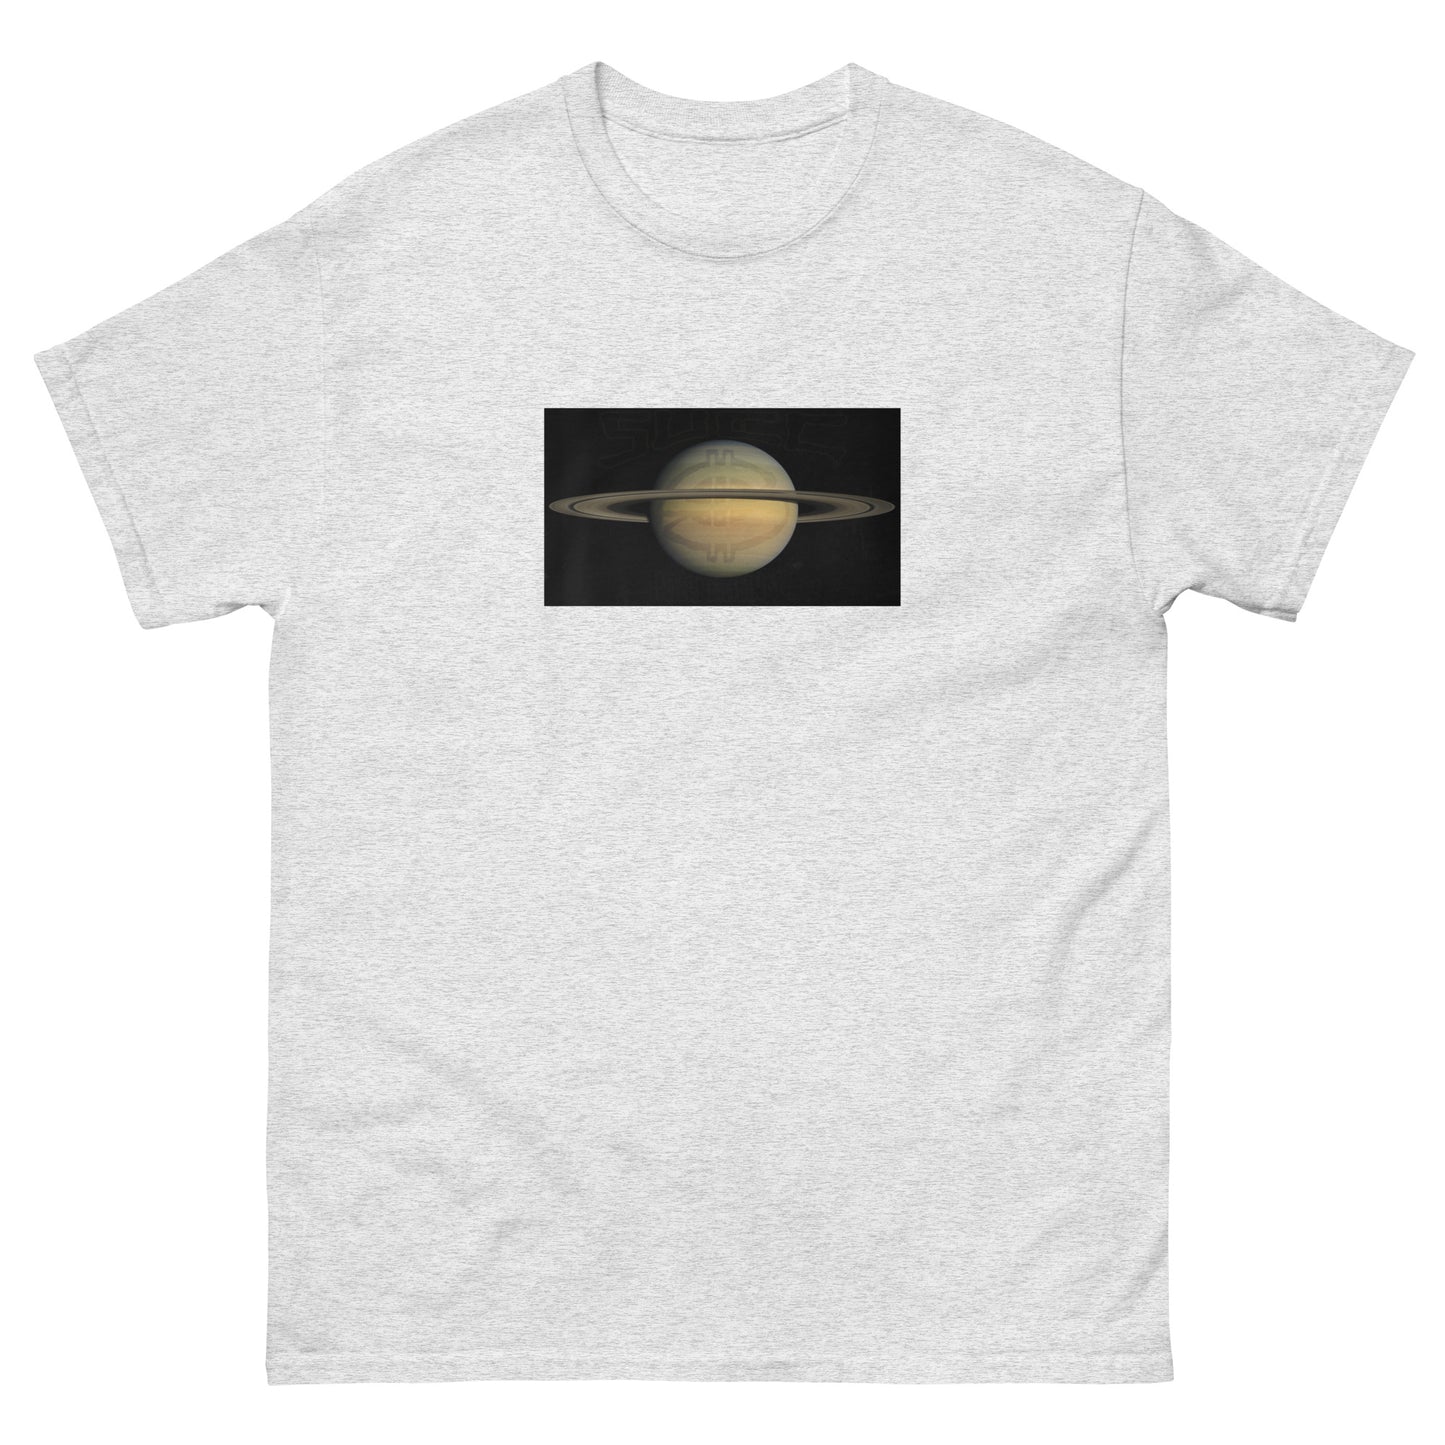 Lil Mayo SUCC Saturn Planet Tee 